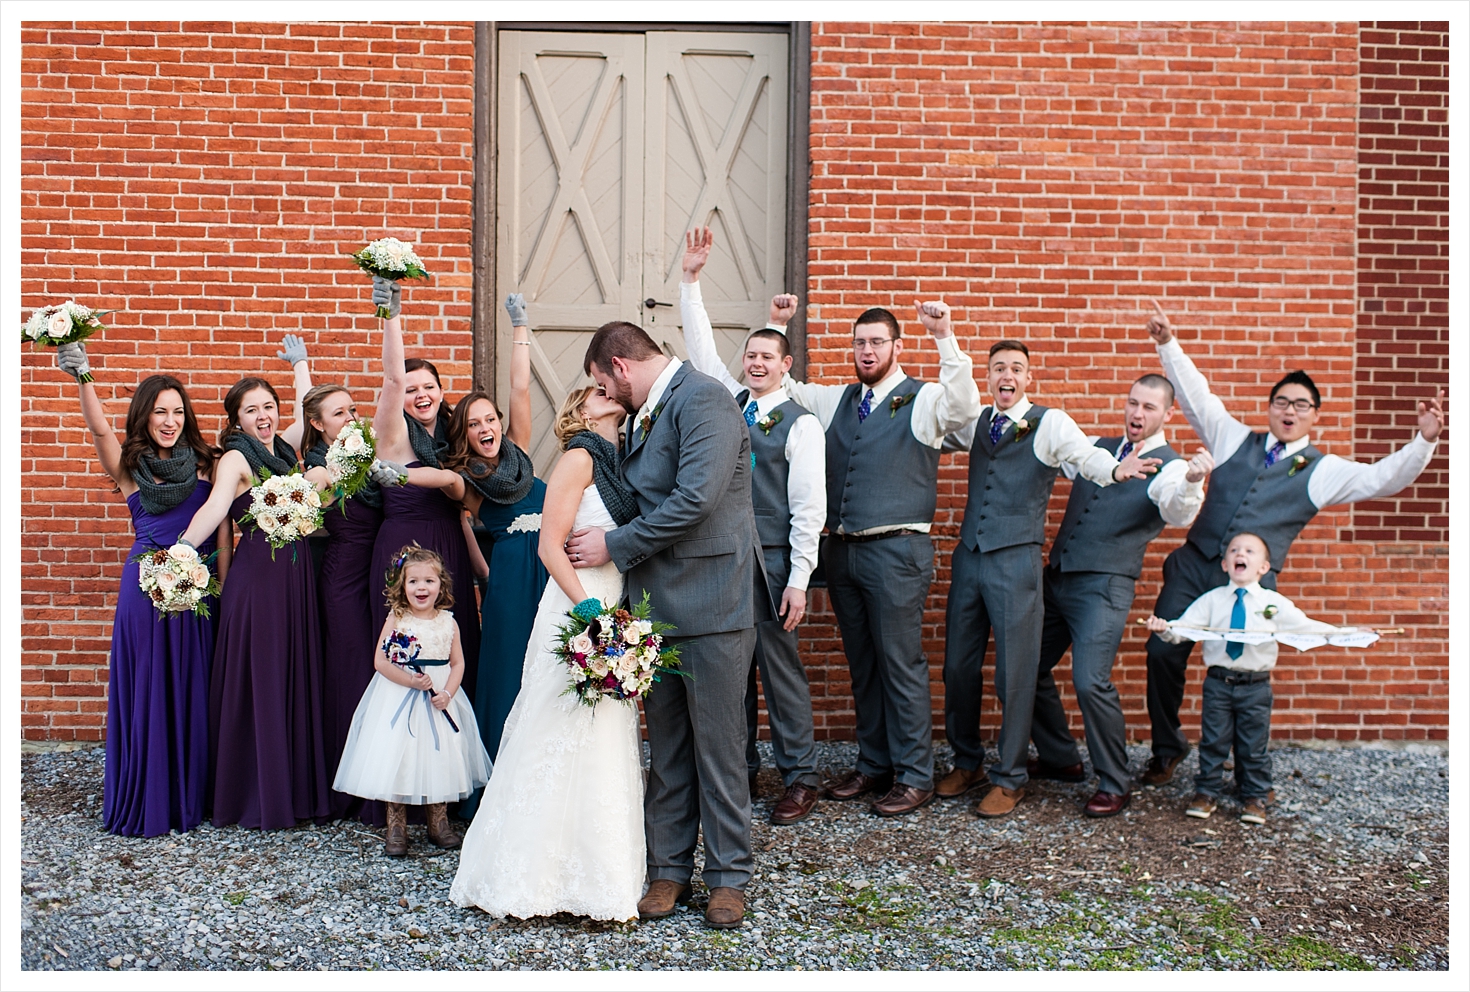 Manheim-Pennsylvania-Booking-House-Wedding-Photography-by-Lauren-R-Swann-photo030